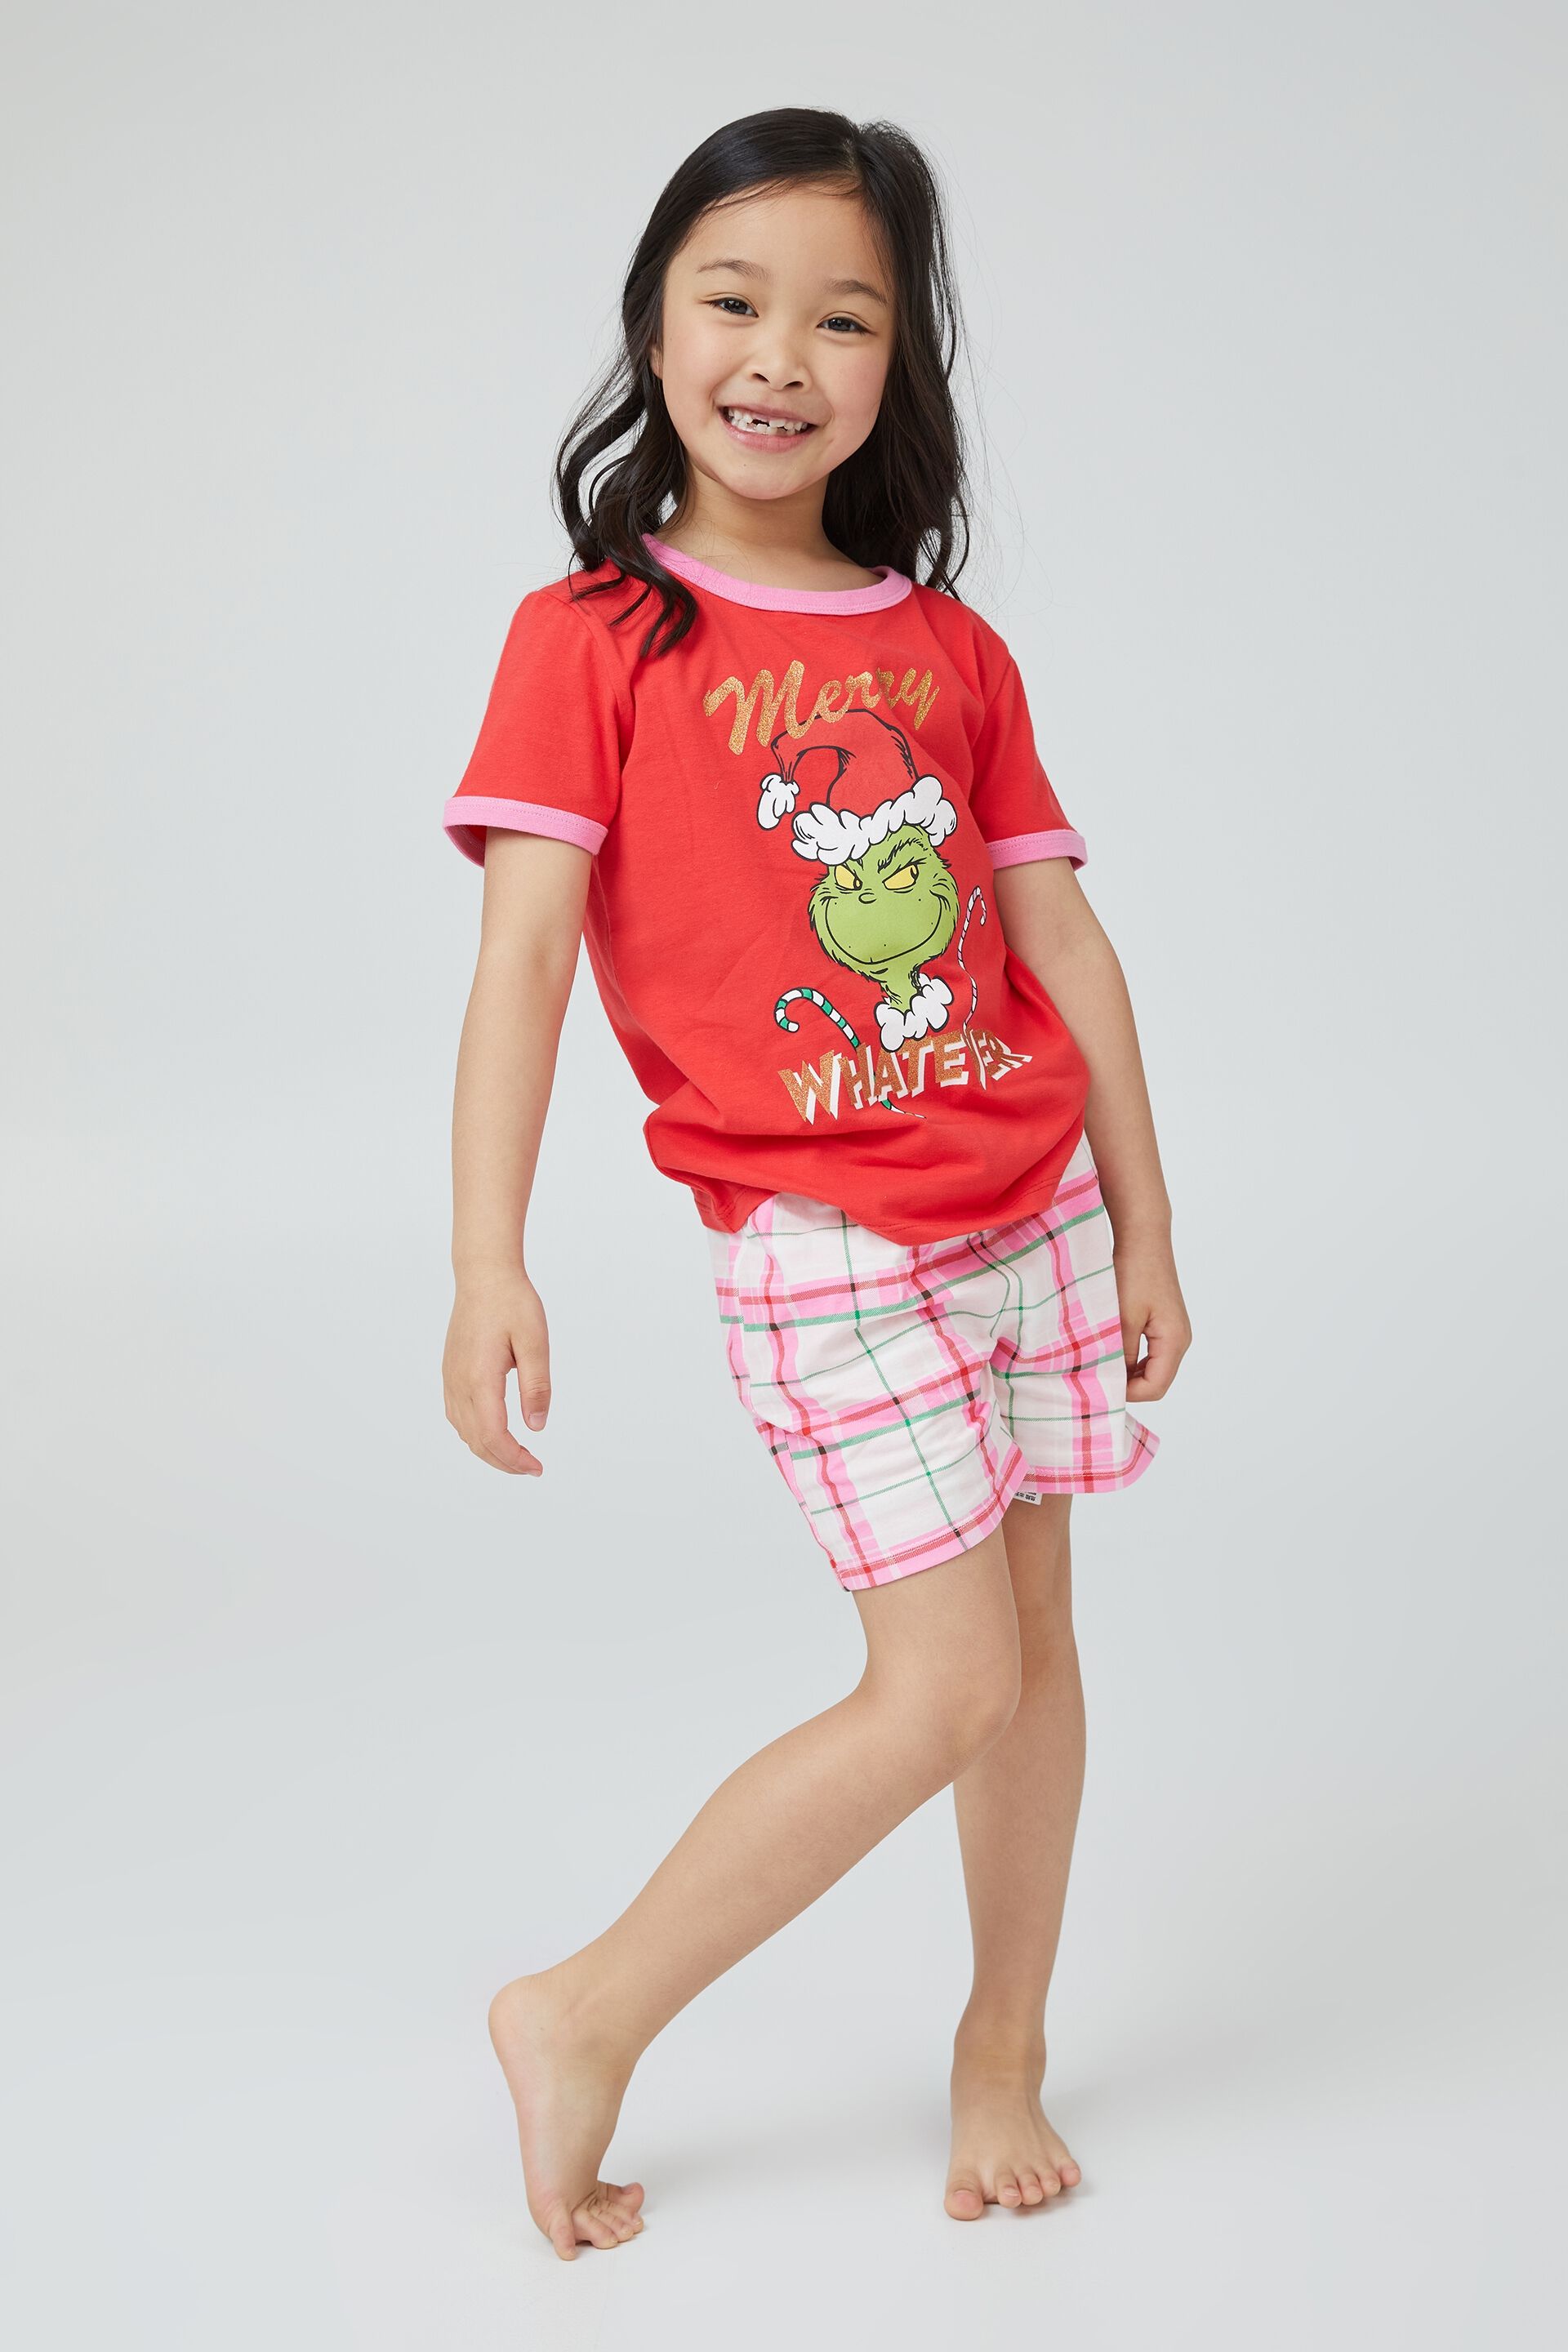 Kleding Meisjeskleding Pyjamas & Badjassen Pyjama Sets Size: 3T Kids Customizable Pajama Set 4T 